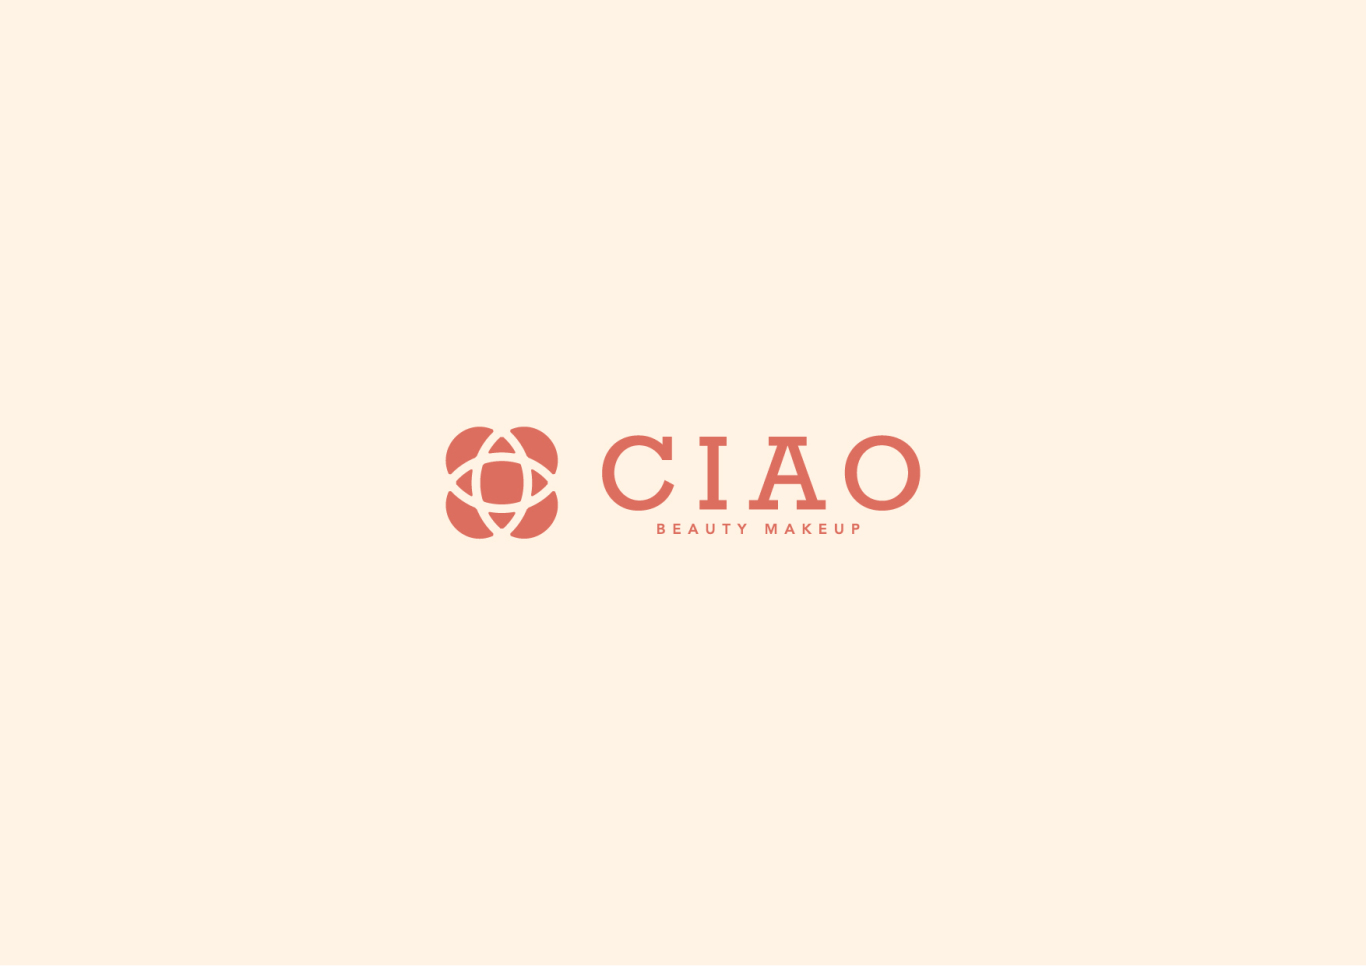 Ciao美妝logo設計圖16